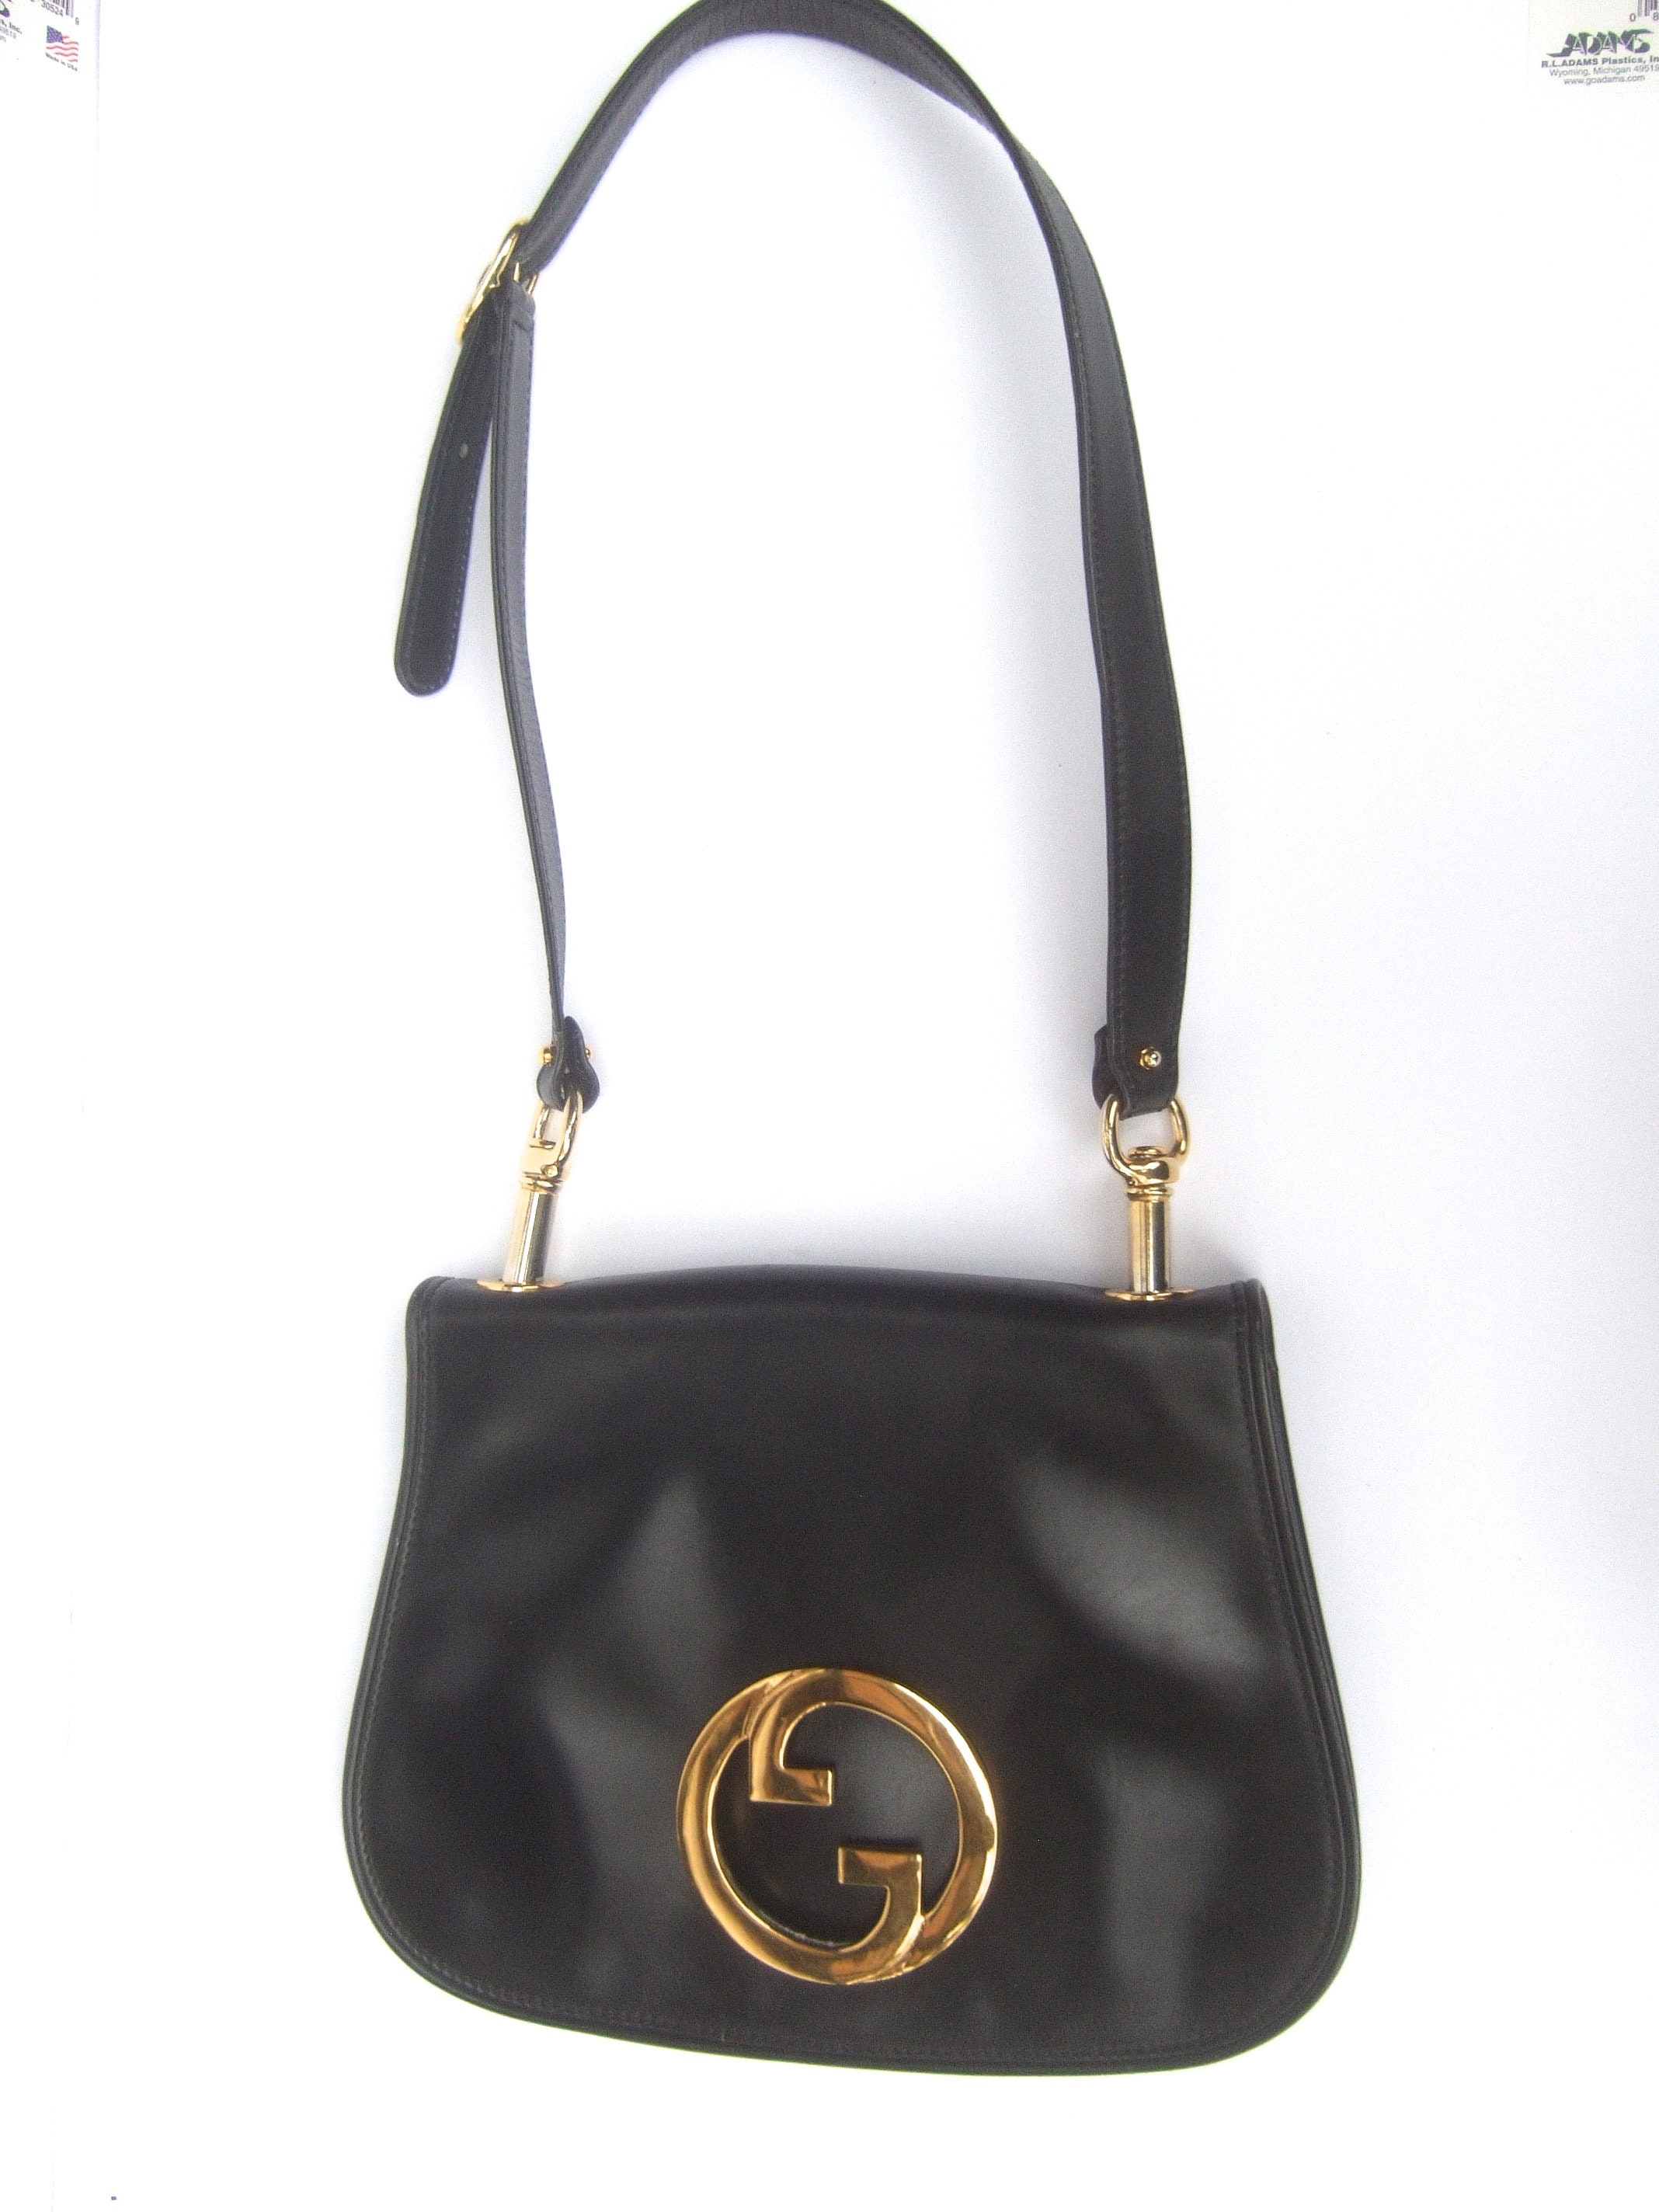 GUCCI Italy Ebony Leather Blondie Shoulder Bag c 1970s | Etsy